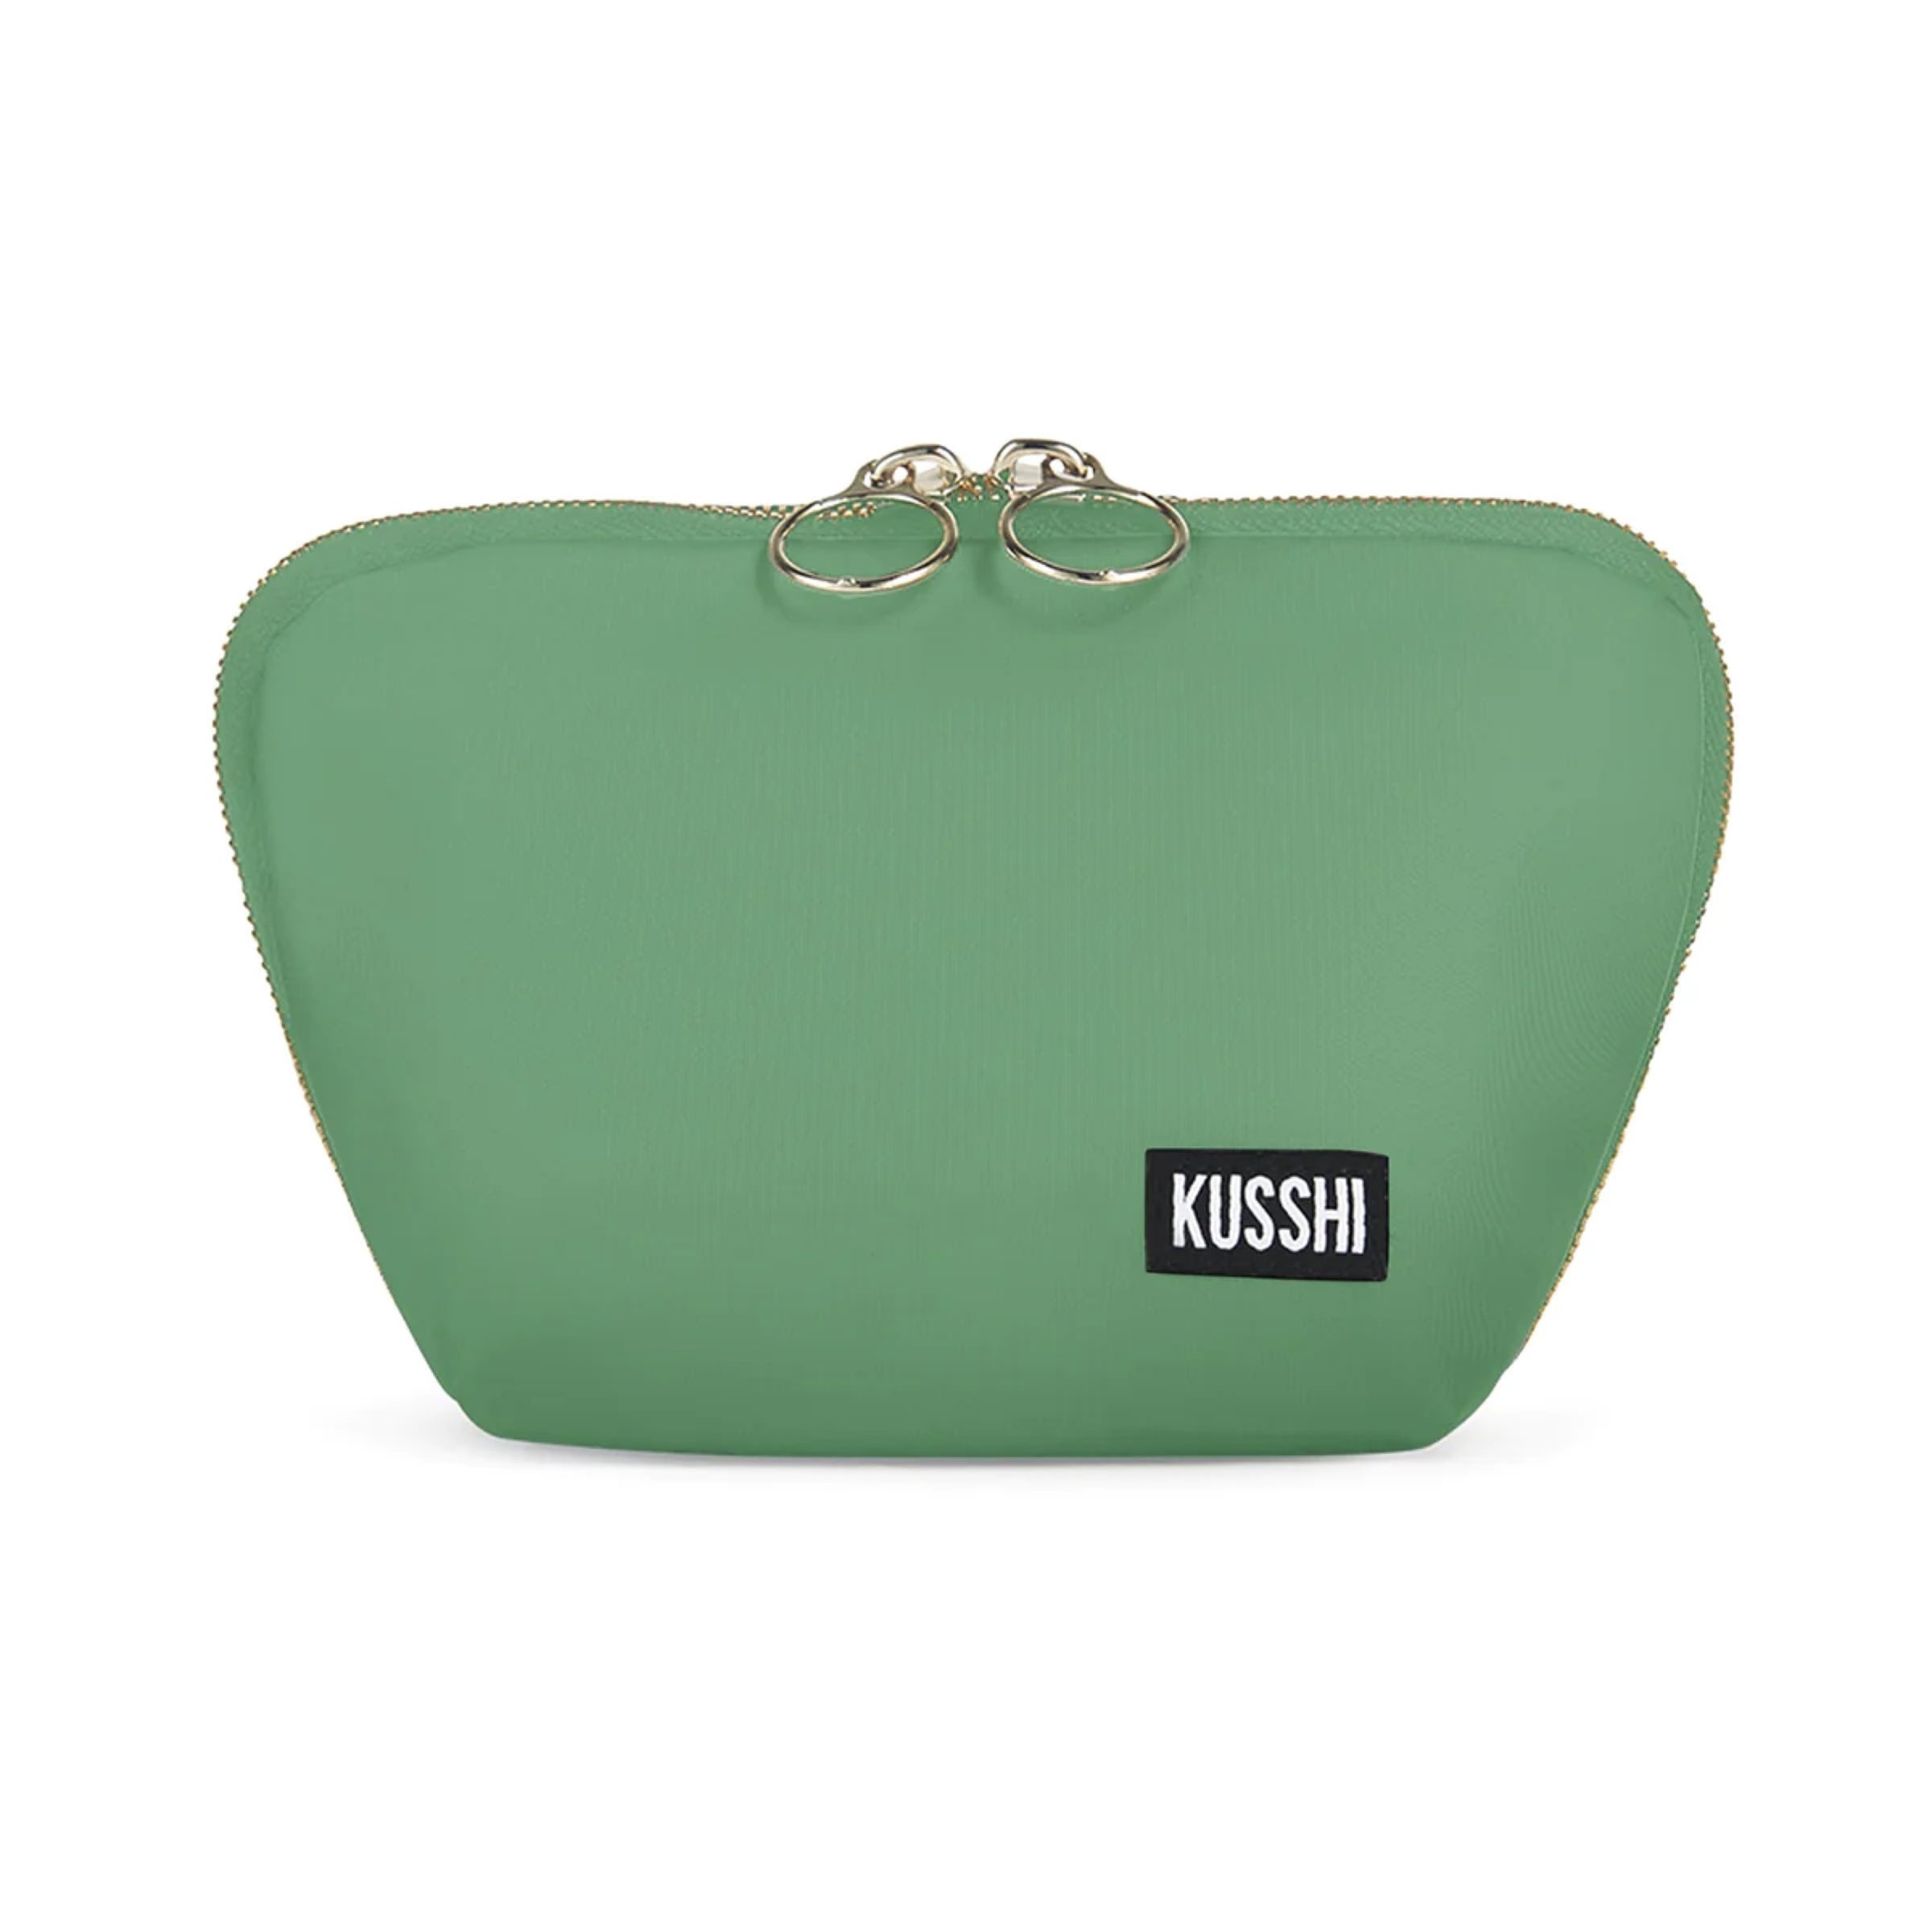 Kusshi Everyday Makeup Bag Kelly Green/Navy